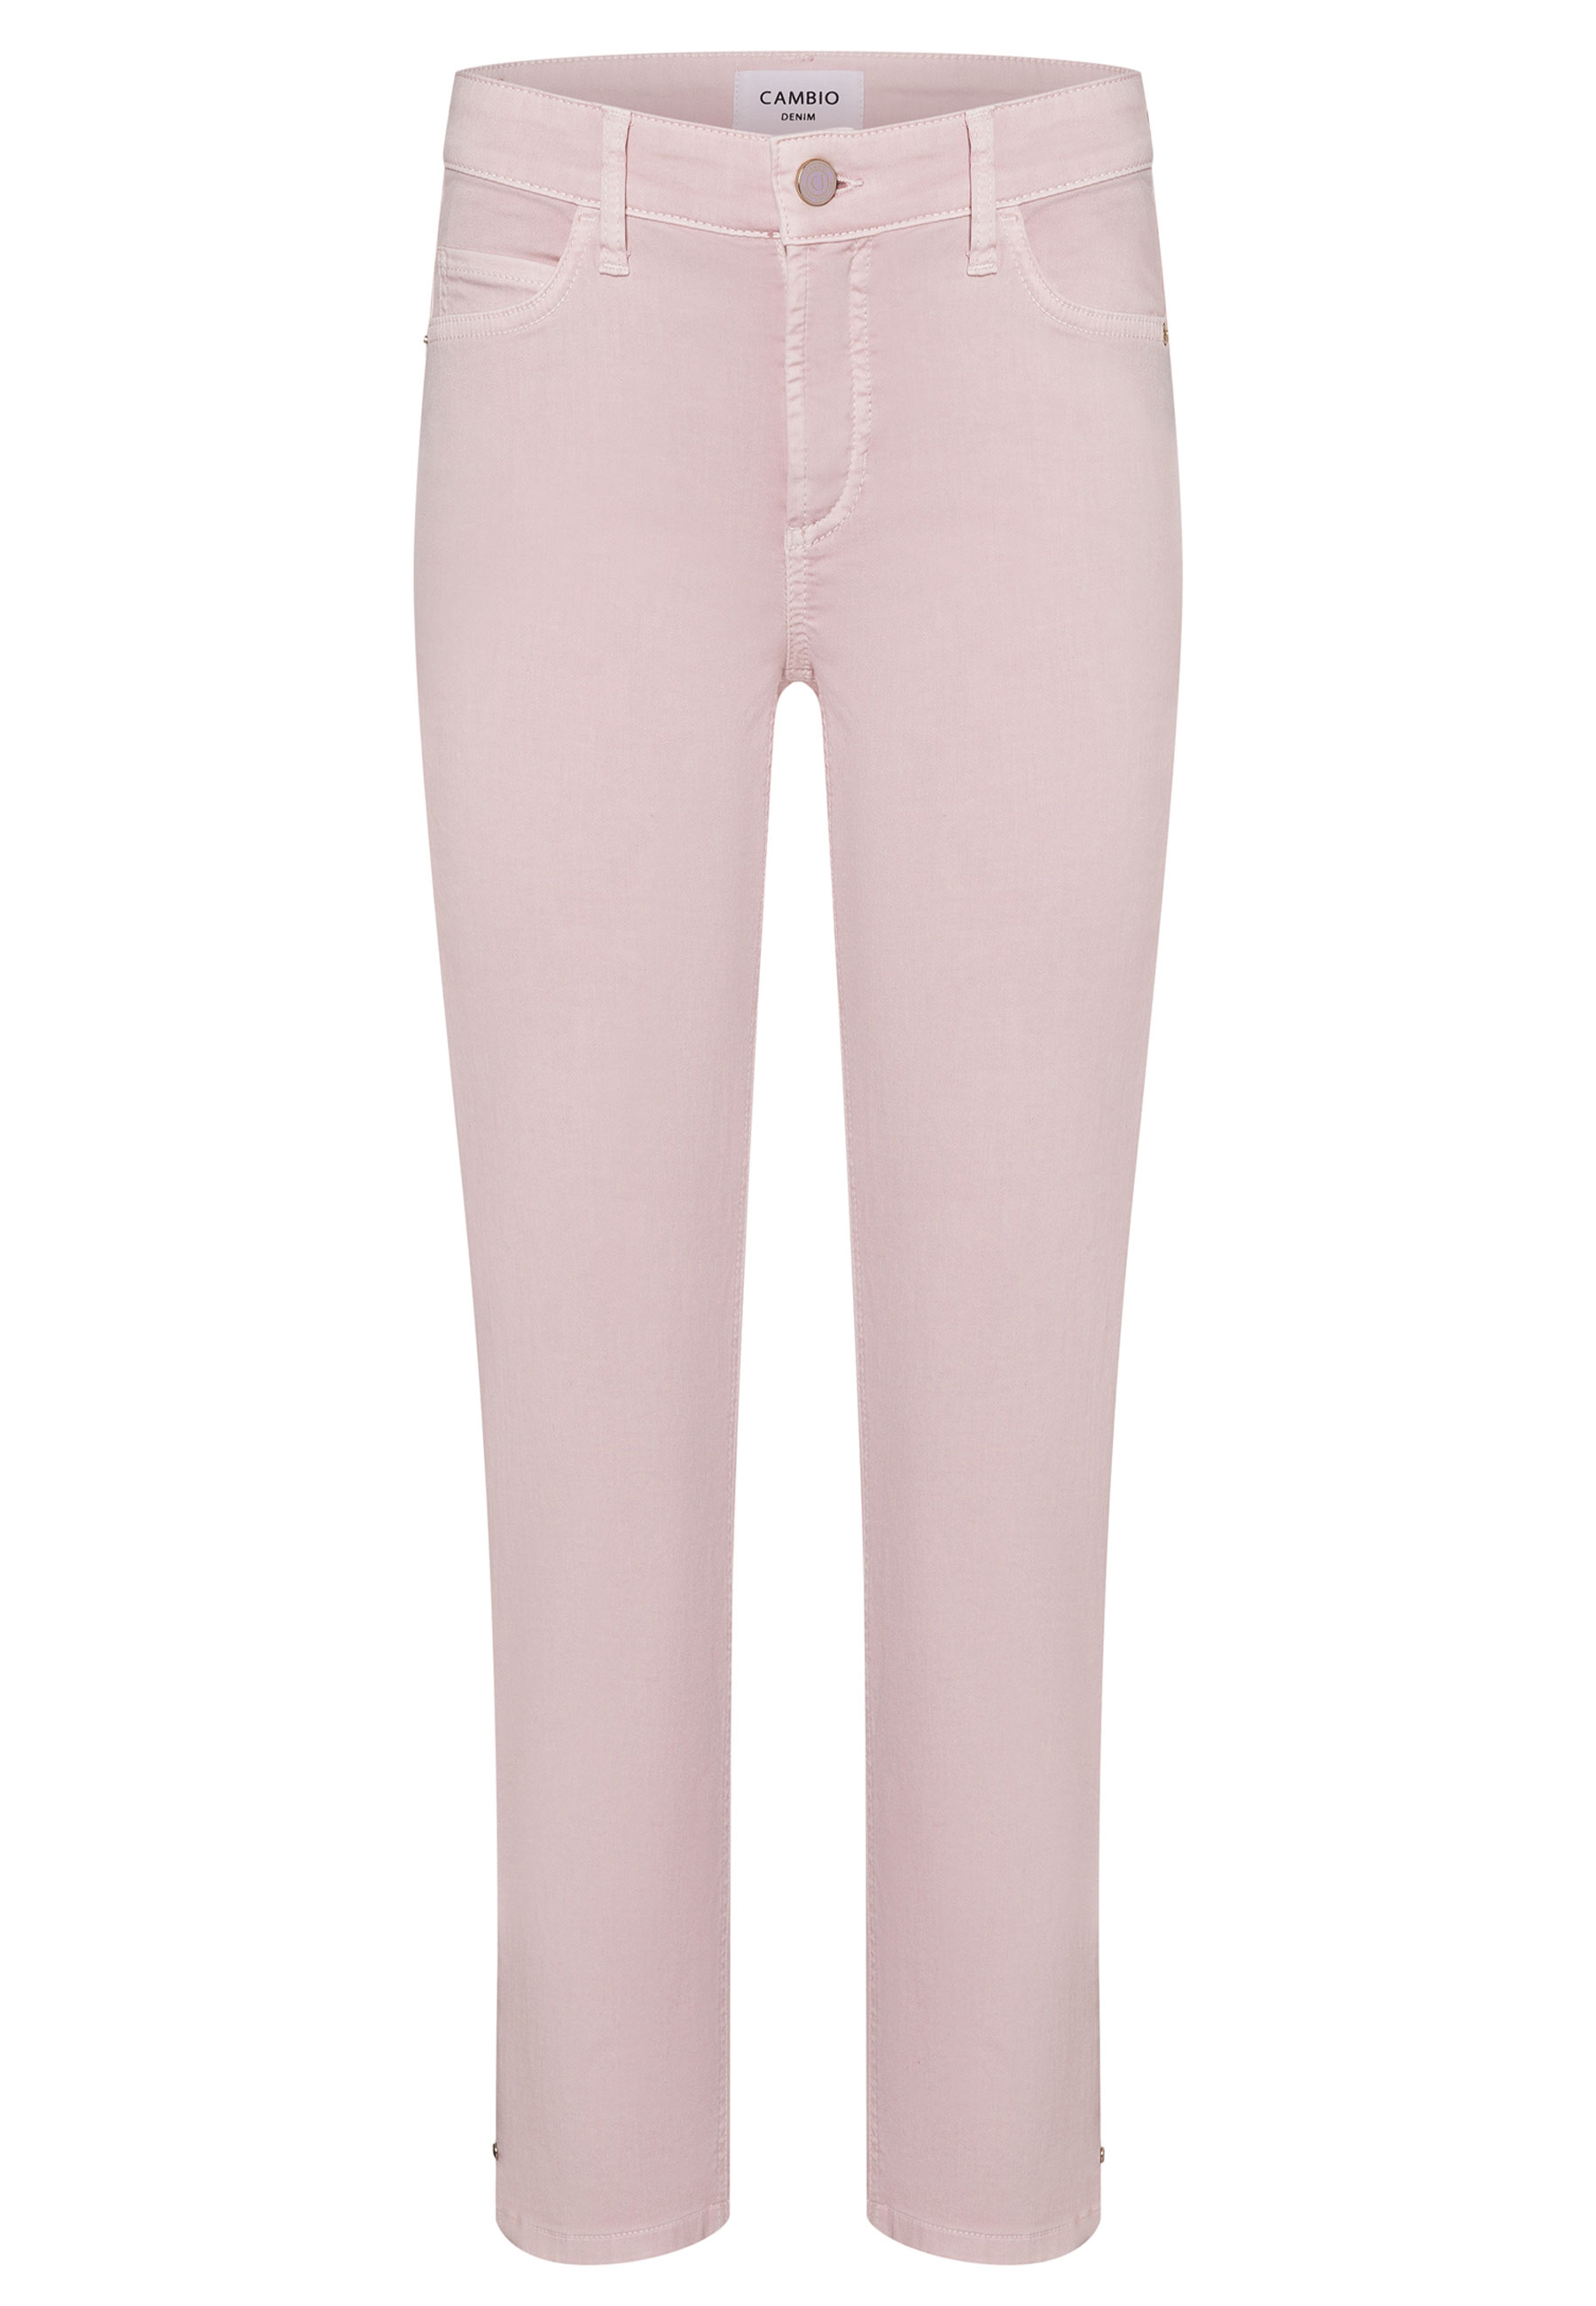 Jeans Roze Piper short jeans roze